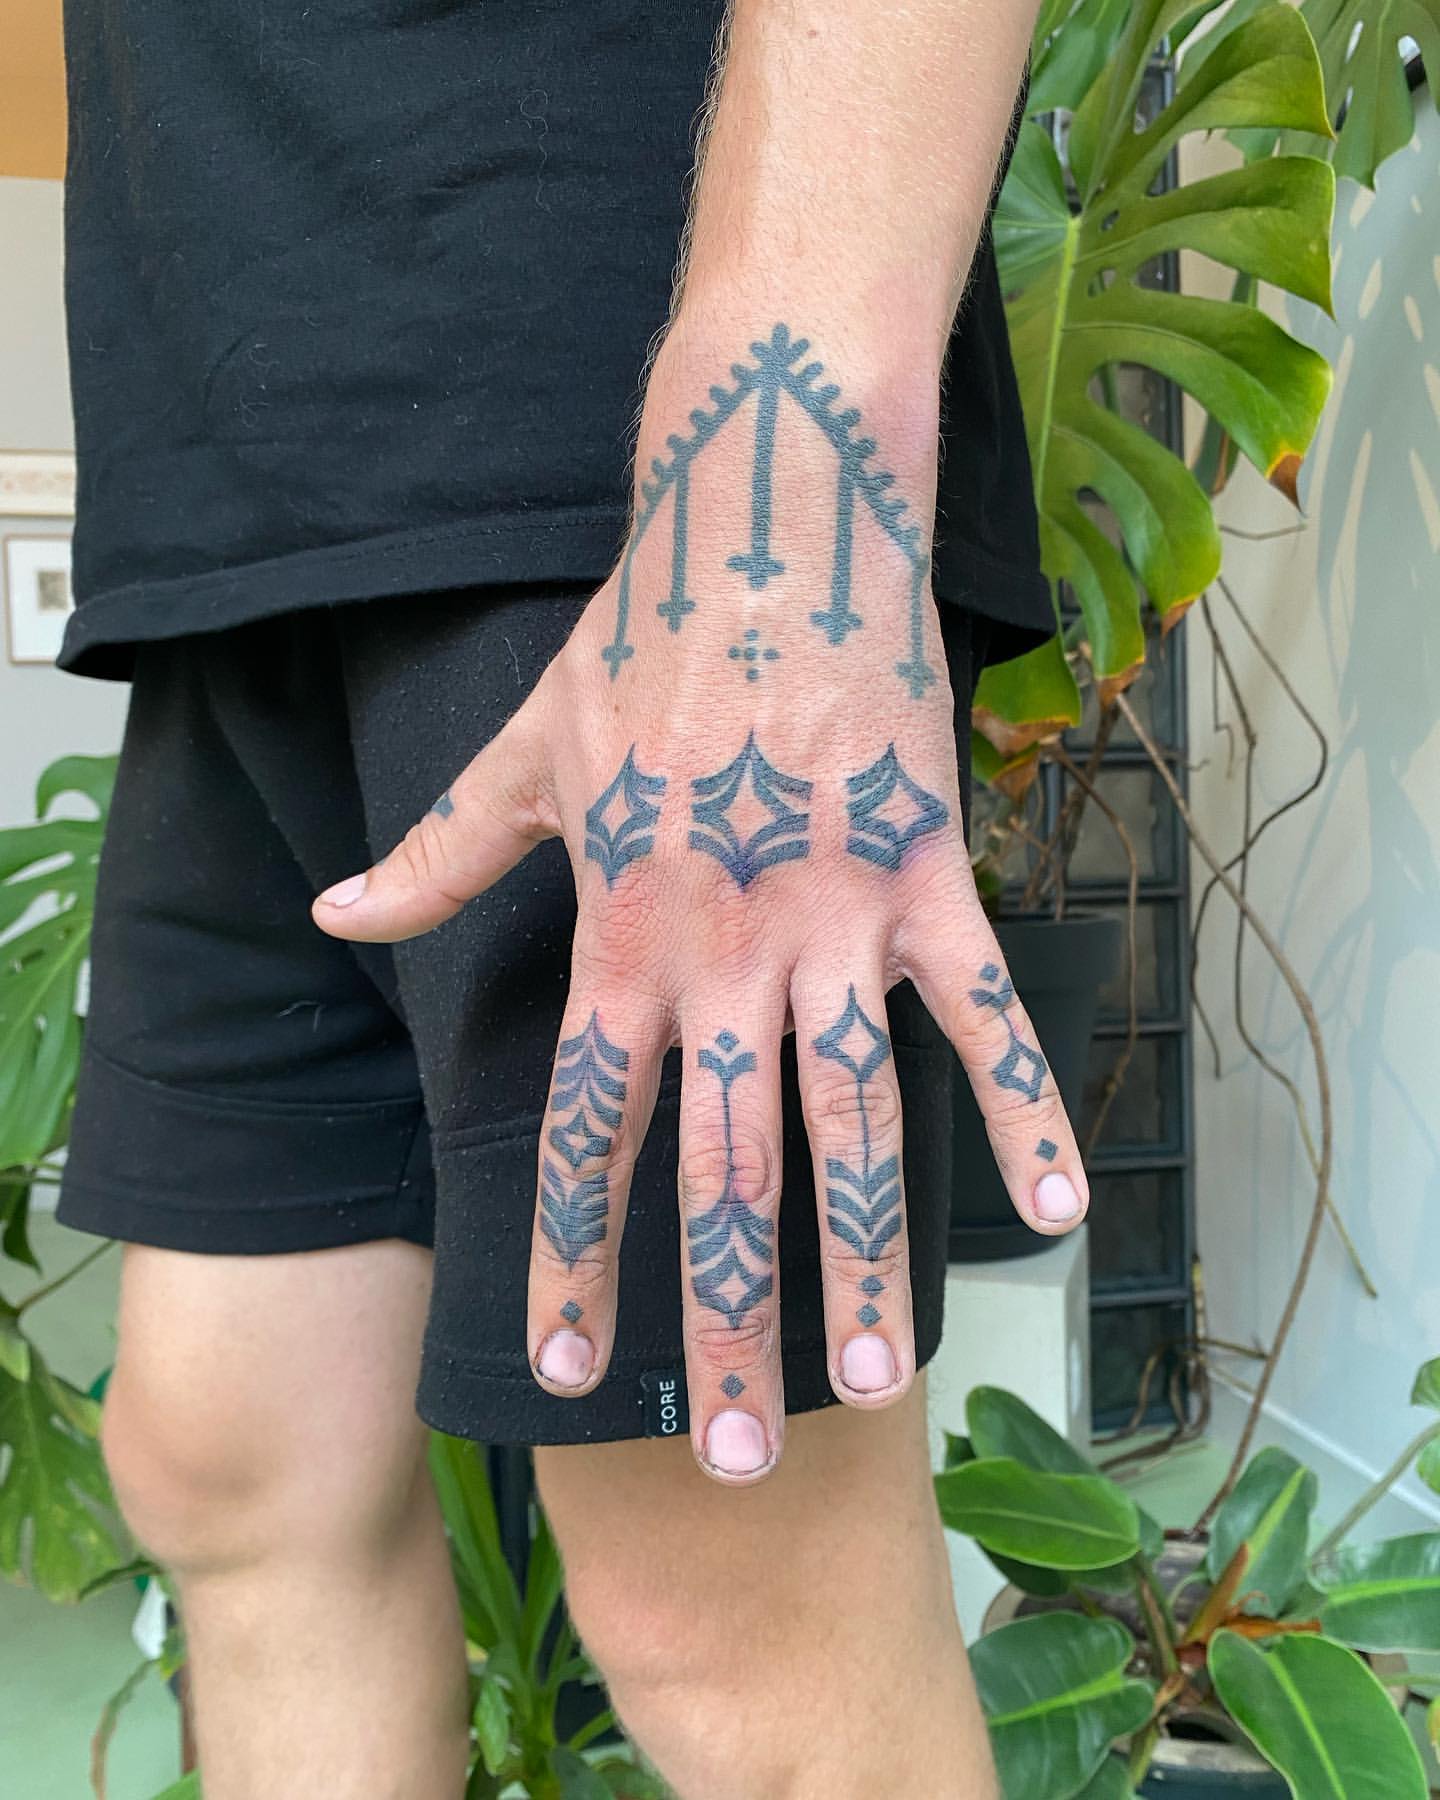 Temporary finger tattoos - Tribal designs | Zazzle